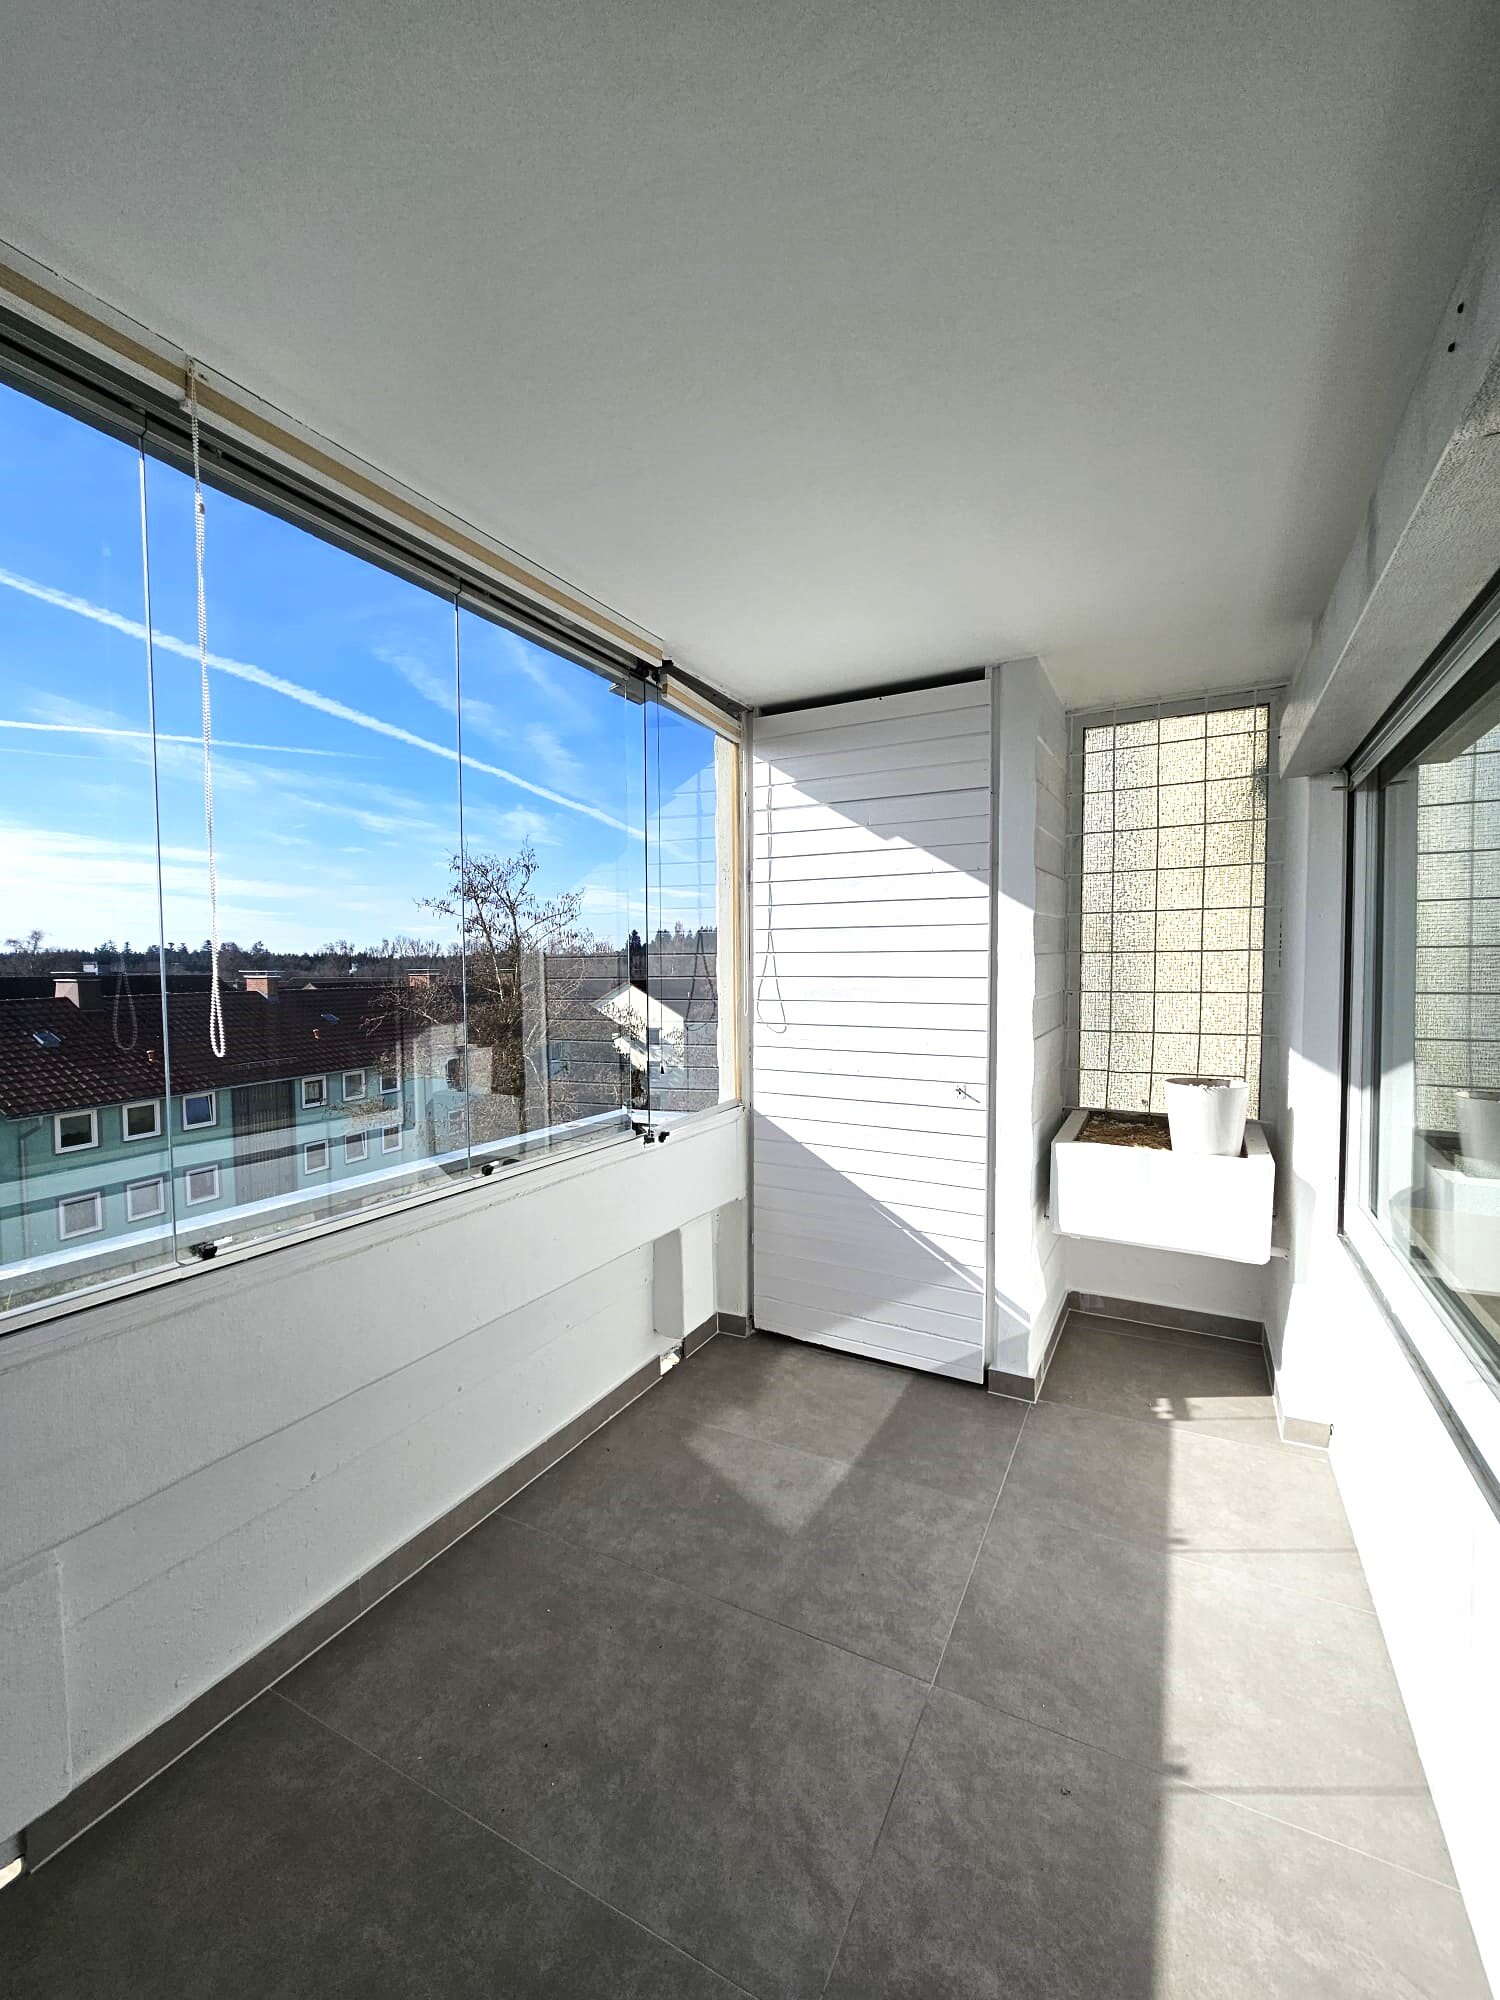 Wohnung zur Miete 1.100 € 3,5 Zimmer 98 m² 3. Geschoss Saurer Wasen - Dickenhardt Villingen-Schwenningen 78054